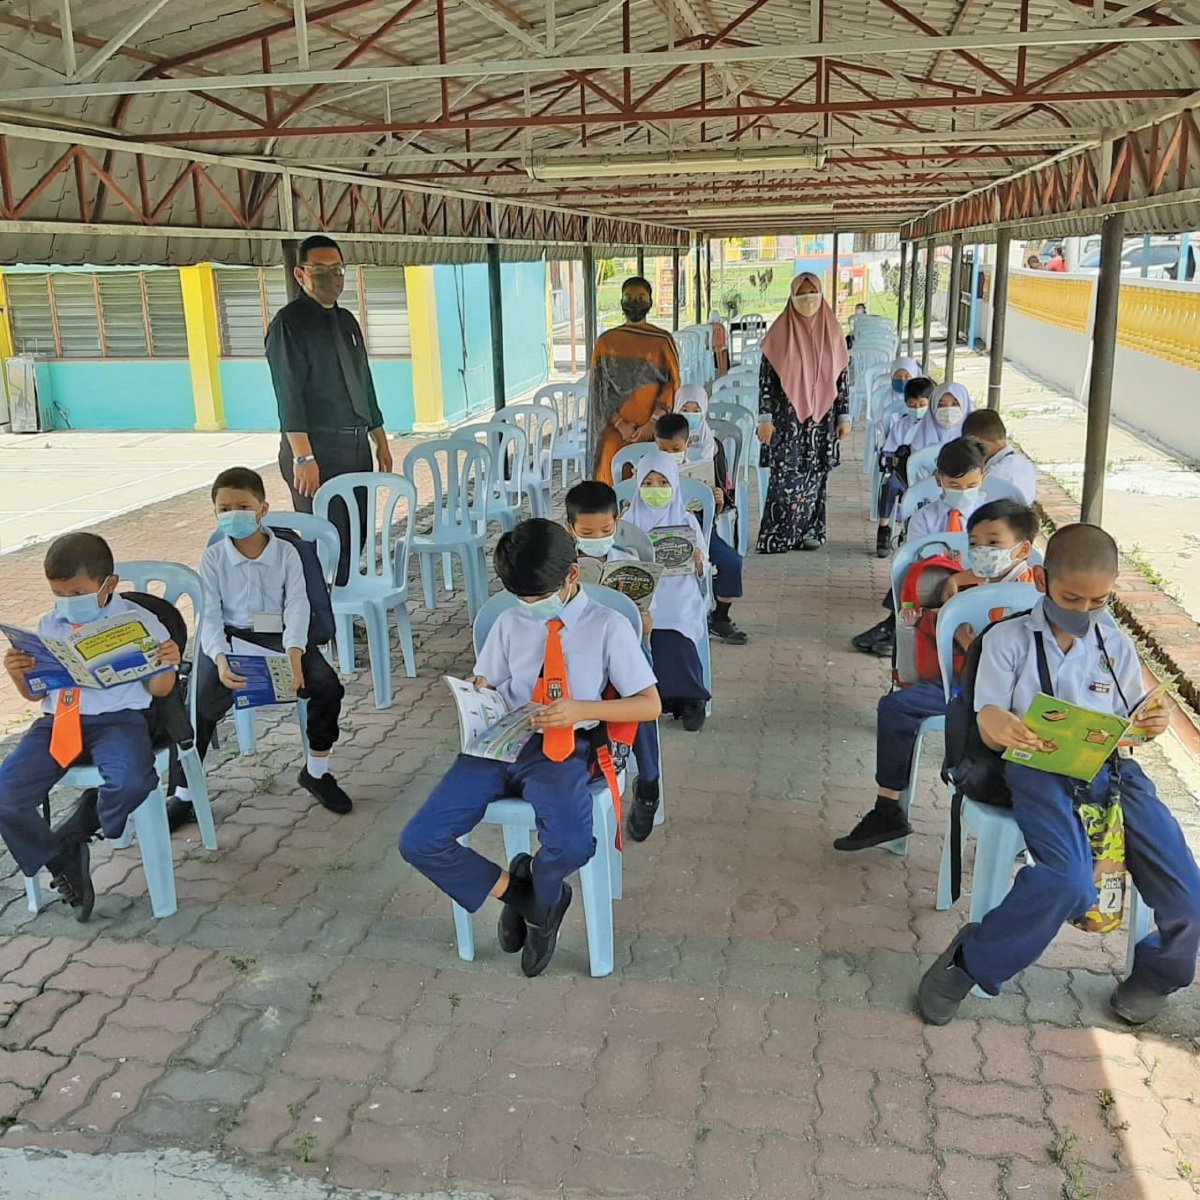 MURID Sekolah Kebangsaan Bandar Baru Bangi  sempat membaca buku sementara menunggu giliran untuk pemeriksaan suhu badan.